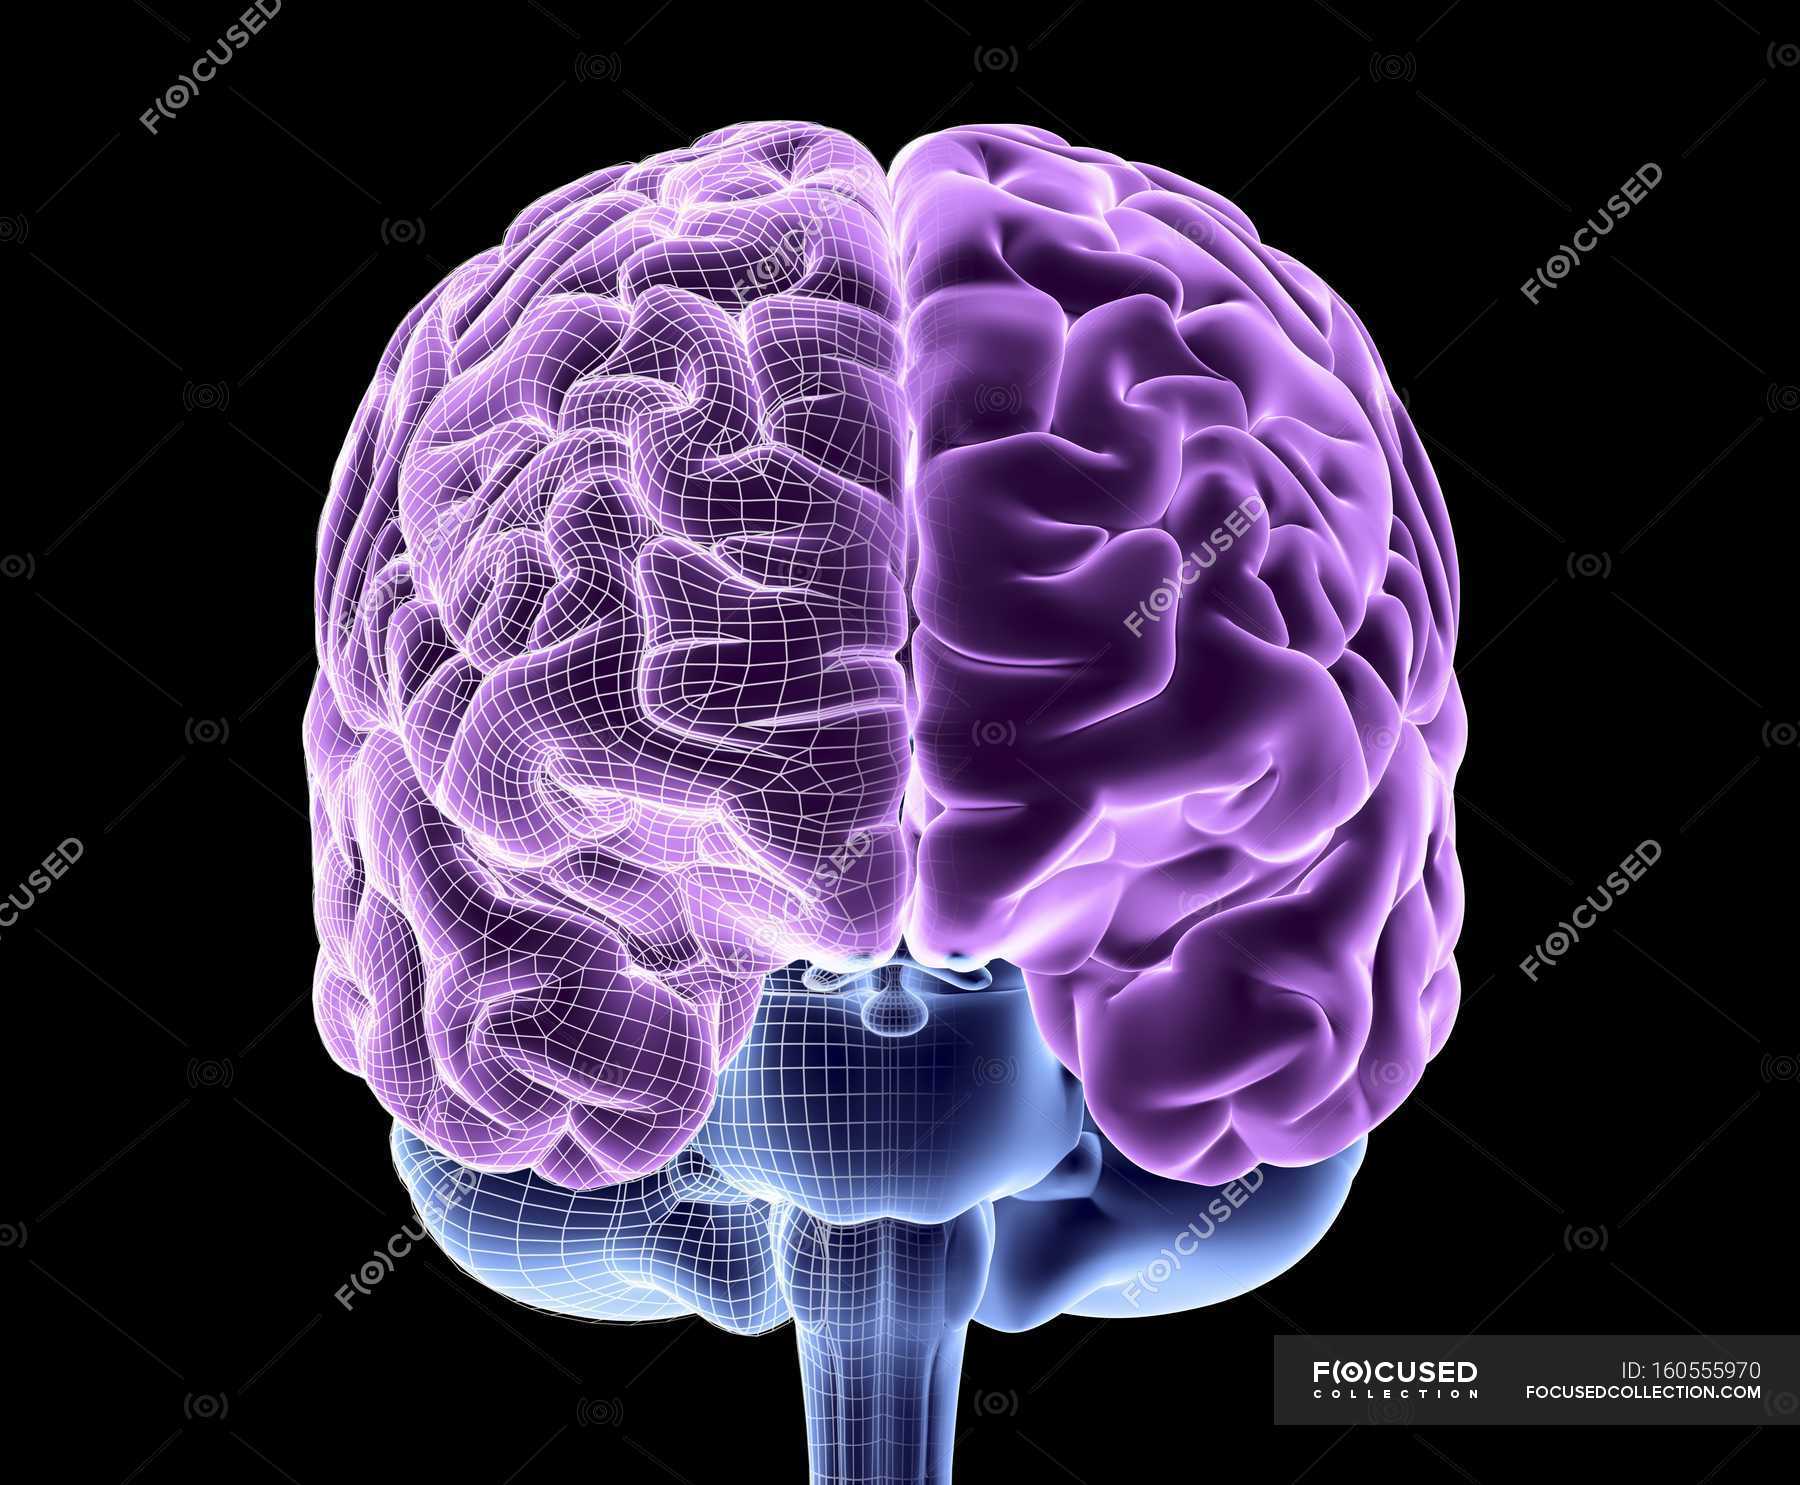 Healthy Human Brain — Brain Folds Details Stock Photo 160555970